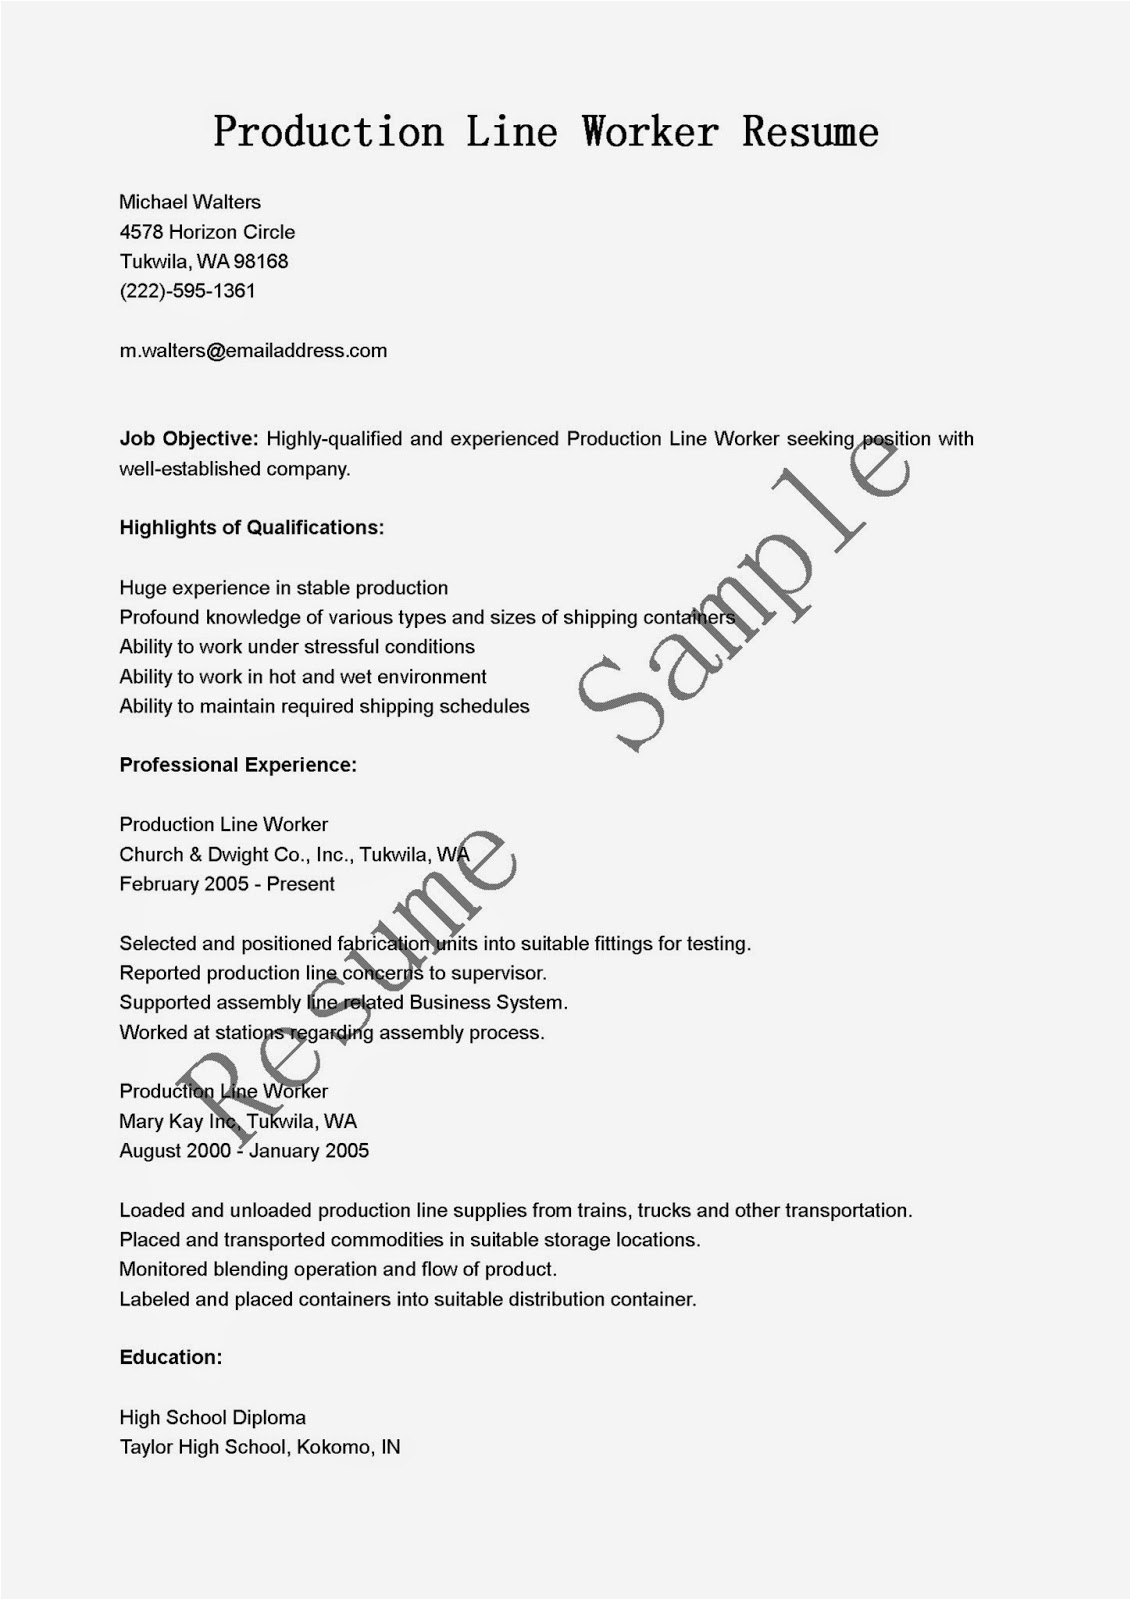 Sample Resume for Production Line Worker Resume Samples Production Line Worker Resume Sample